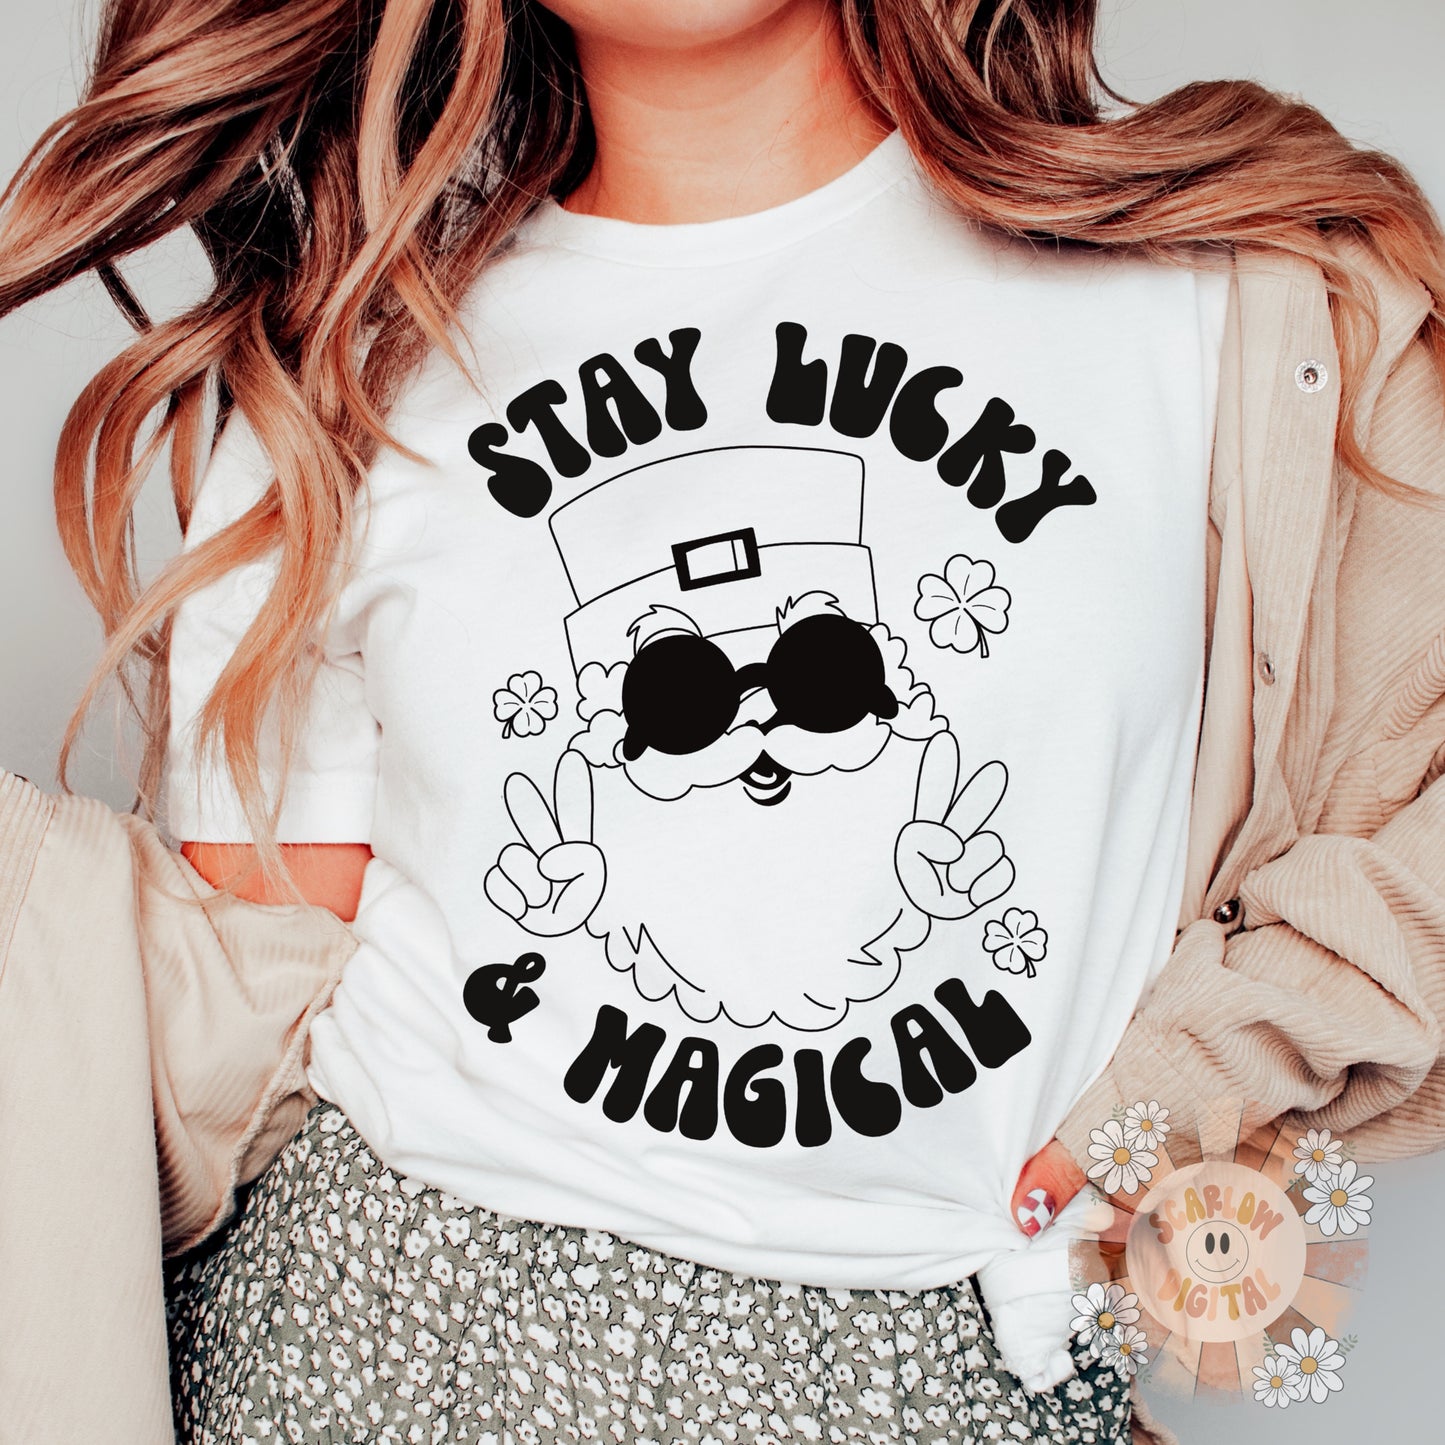 Stay Lucky and Magical SVG-Saint Patrick's Day Cricut Cut Files-clover svg, leprechaun svg, little boy svg, groovy leprechaun svg designs